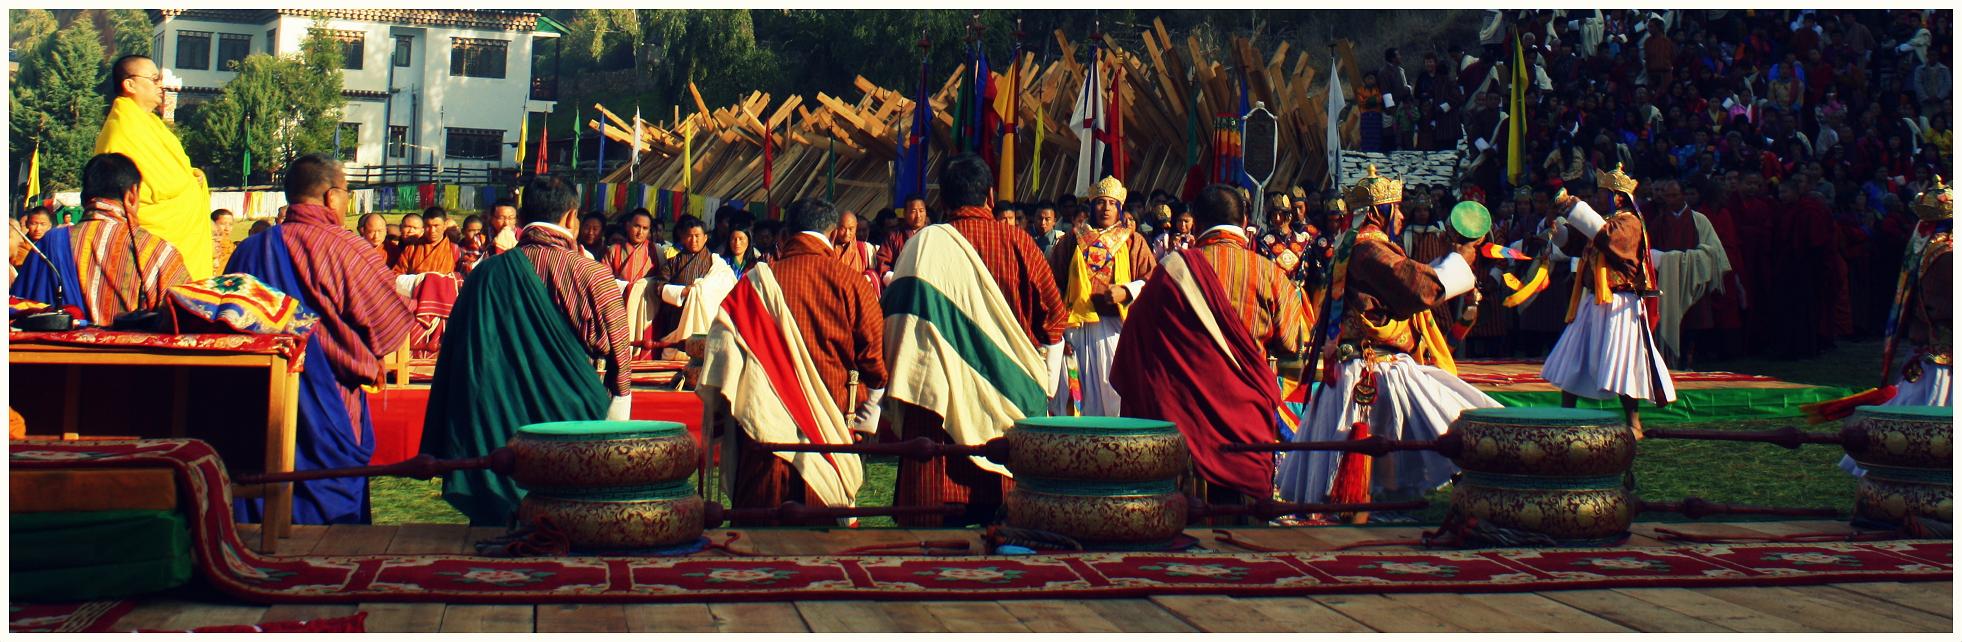 Bhutan Music Festival